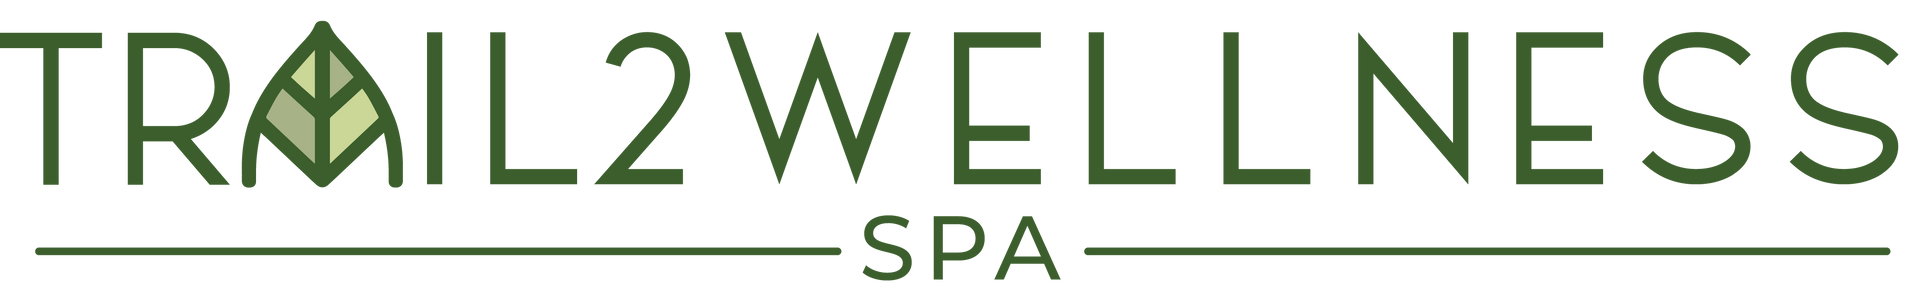 Trail 2 Wellness Spa Logo